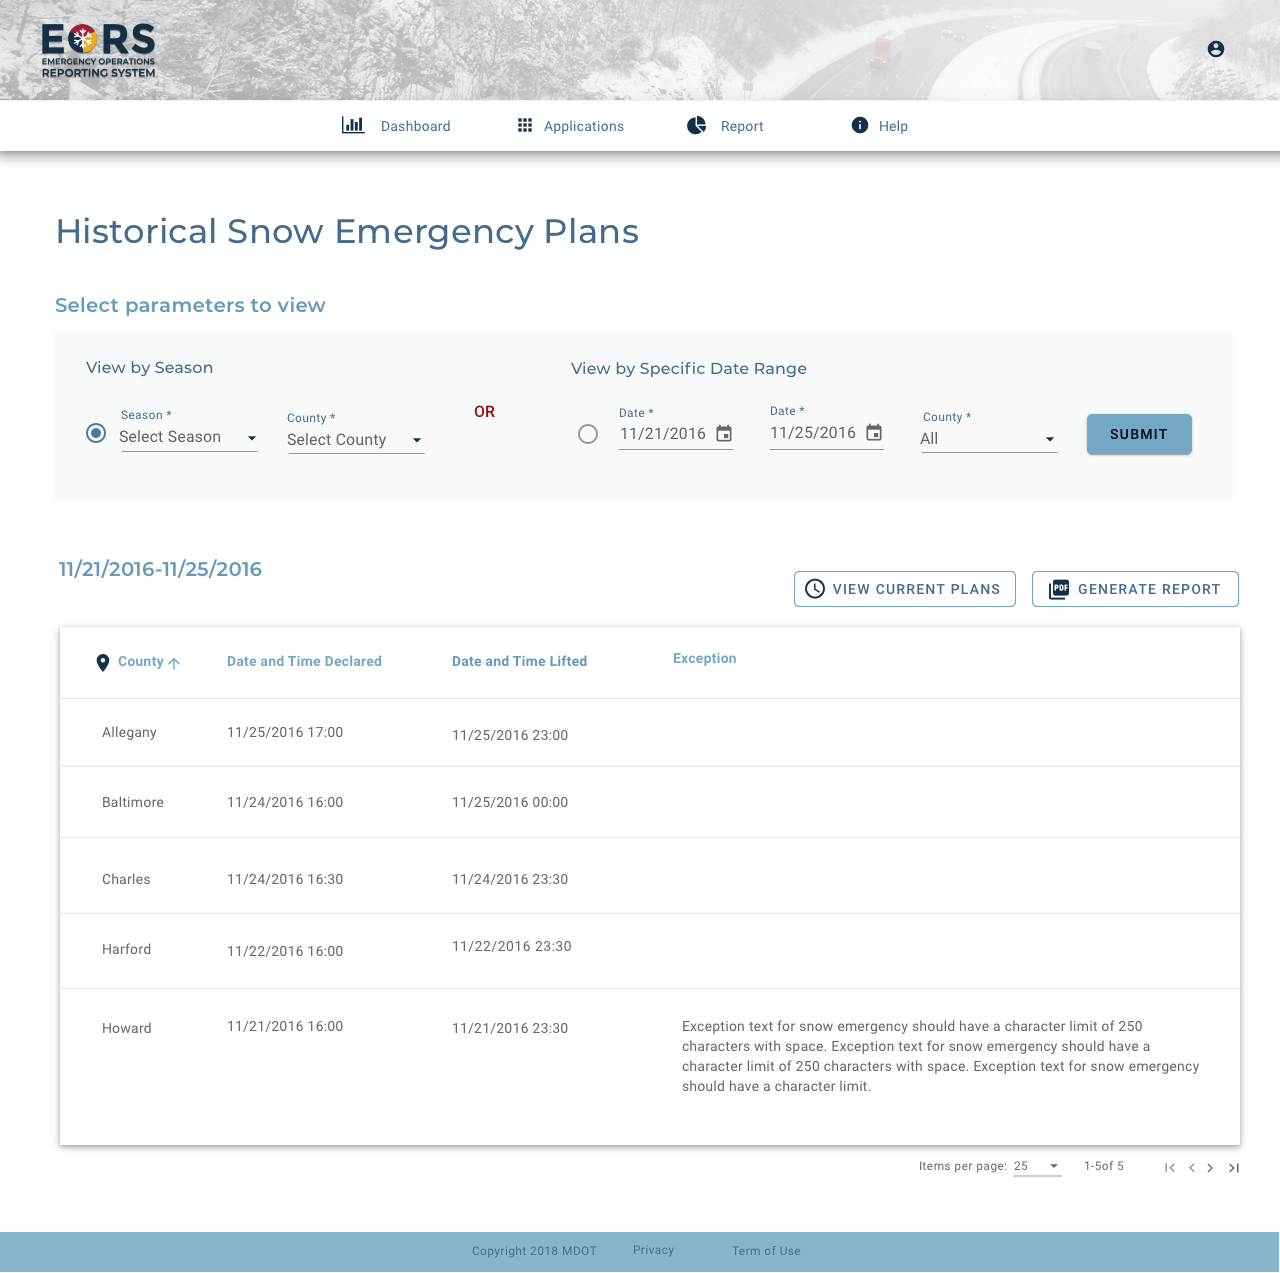 EORS Snow Emergency Plan View History